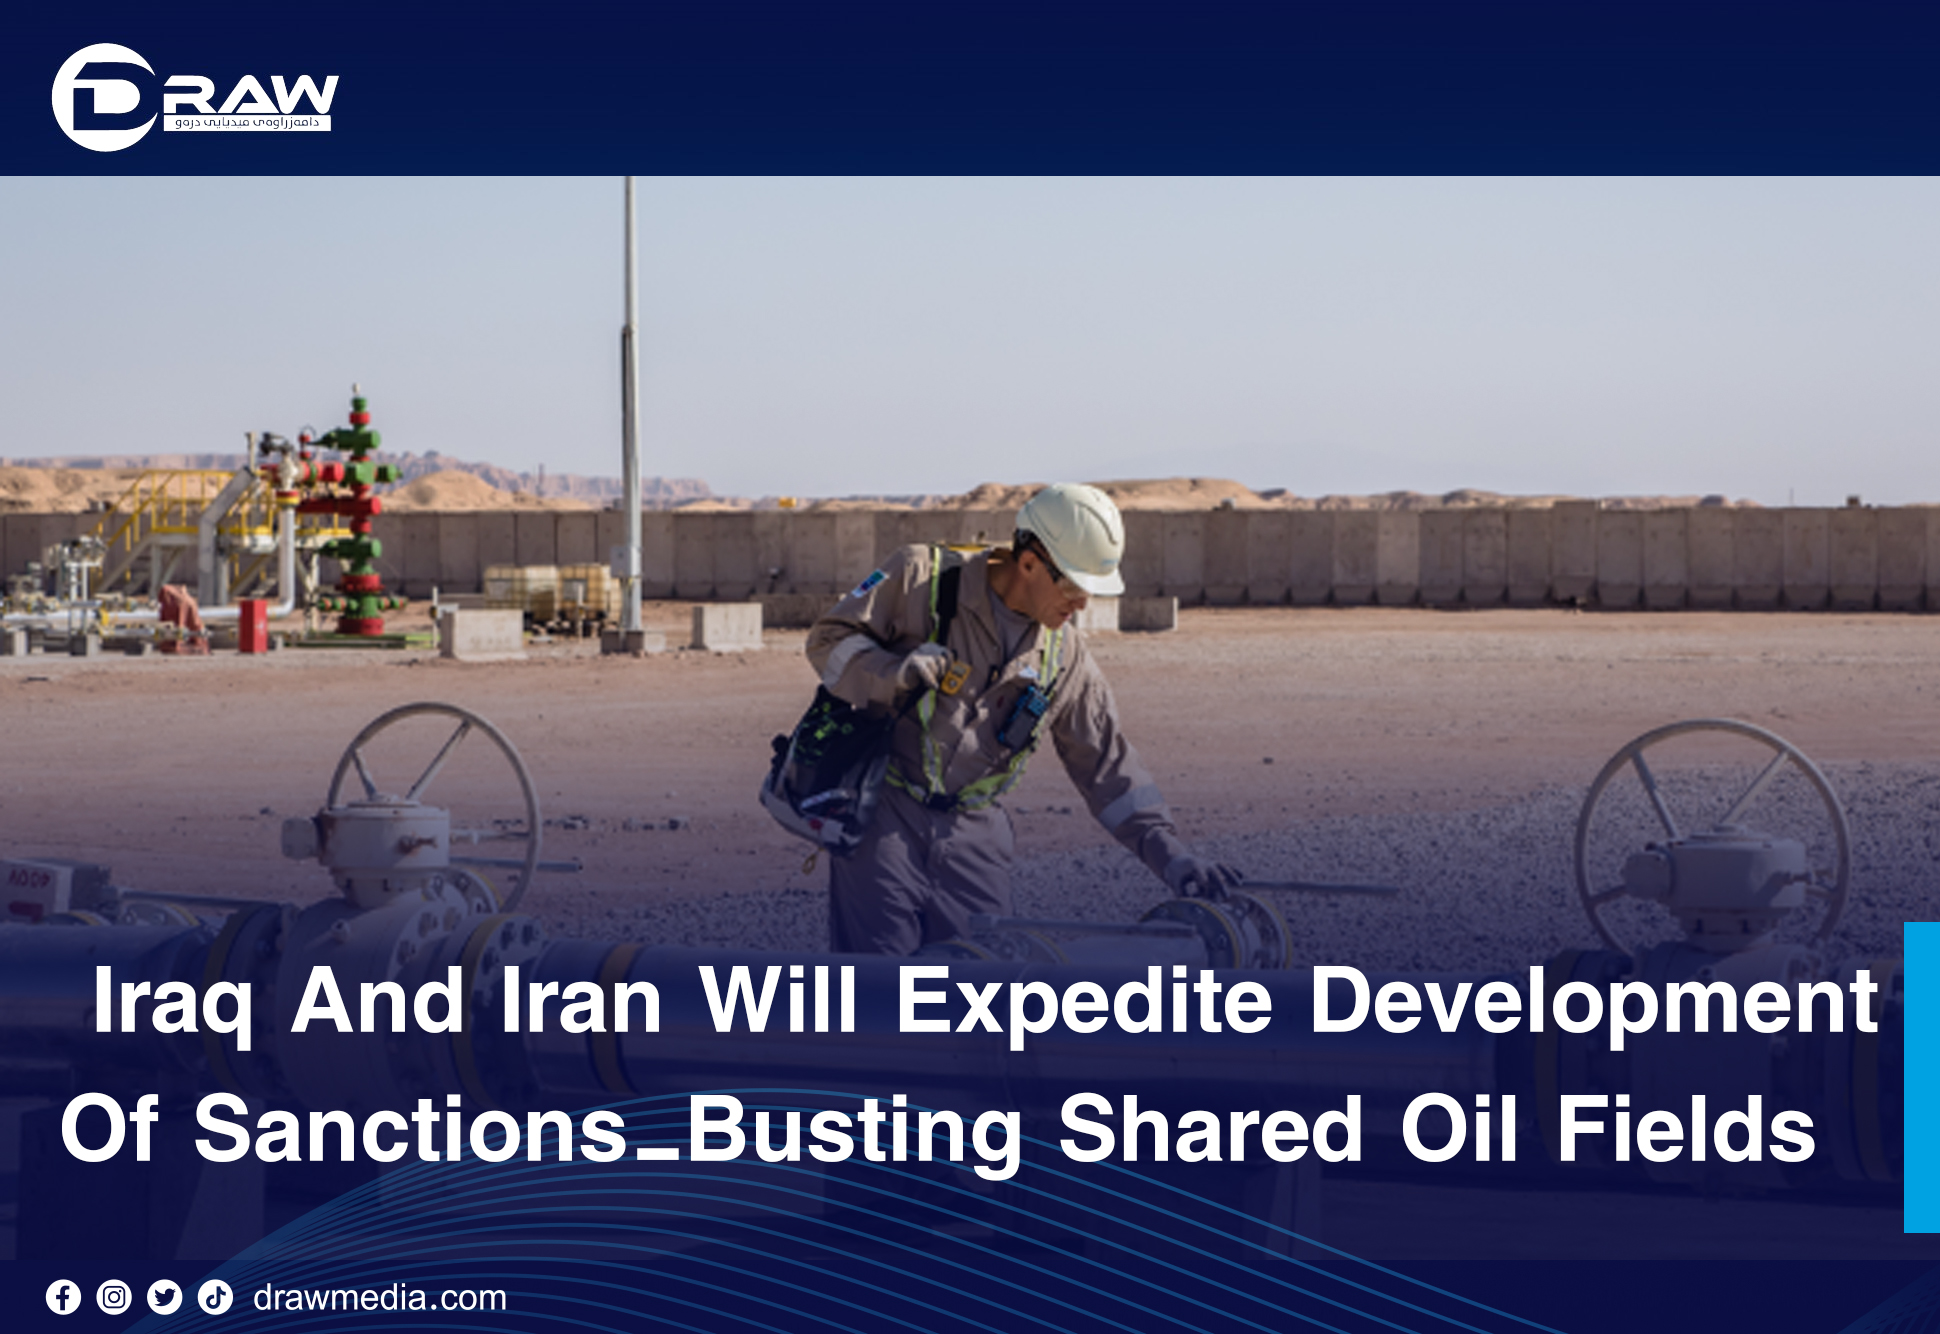 DrawMedia.net / Iraq And Iran Will Expedite Development Of Sanctions-Busting Shared Oil Fields